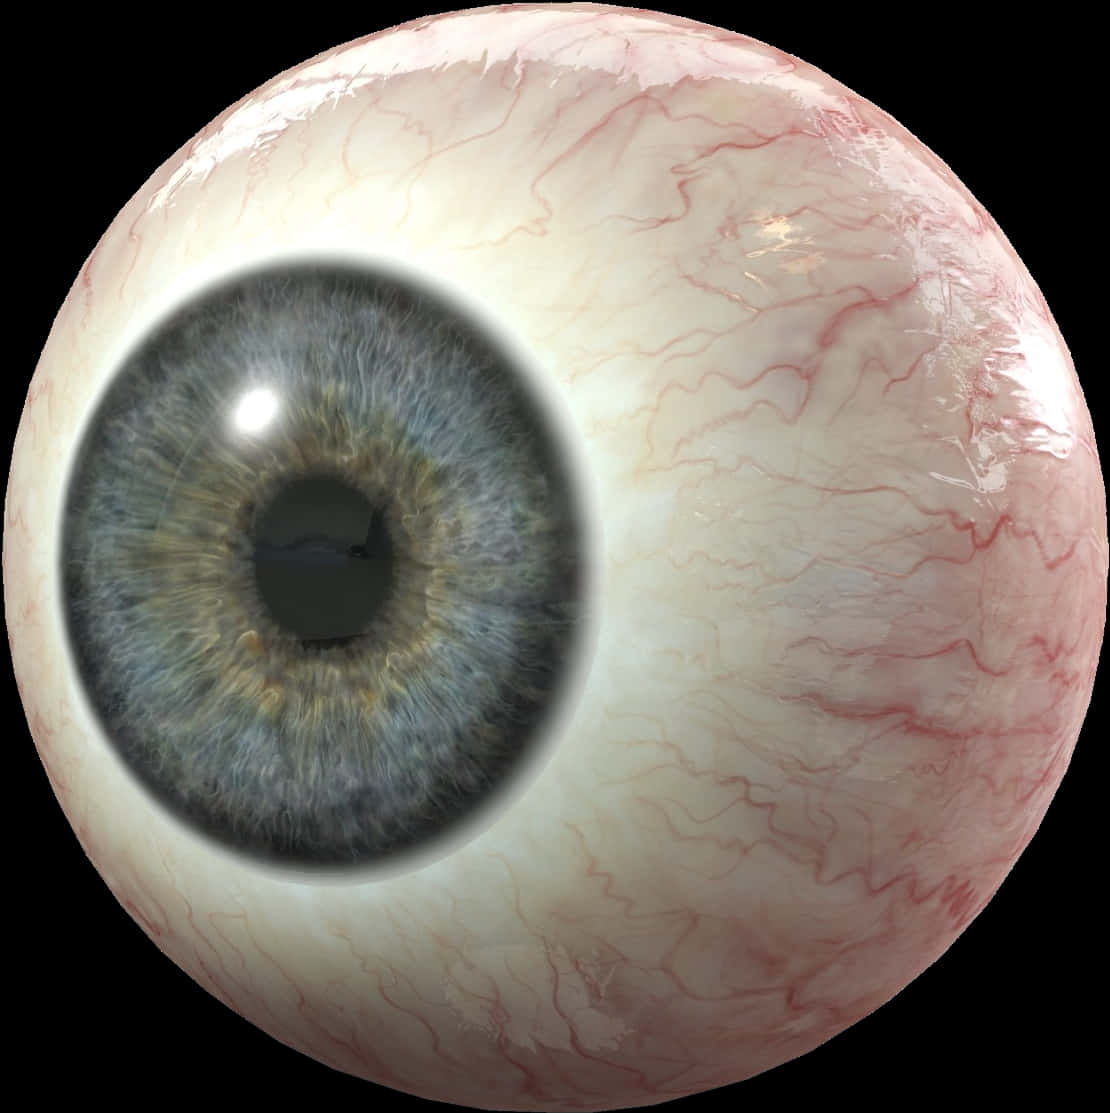 A Close Up Of A Human Eyeball